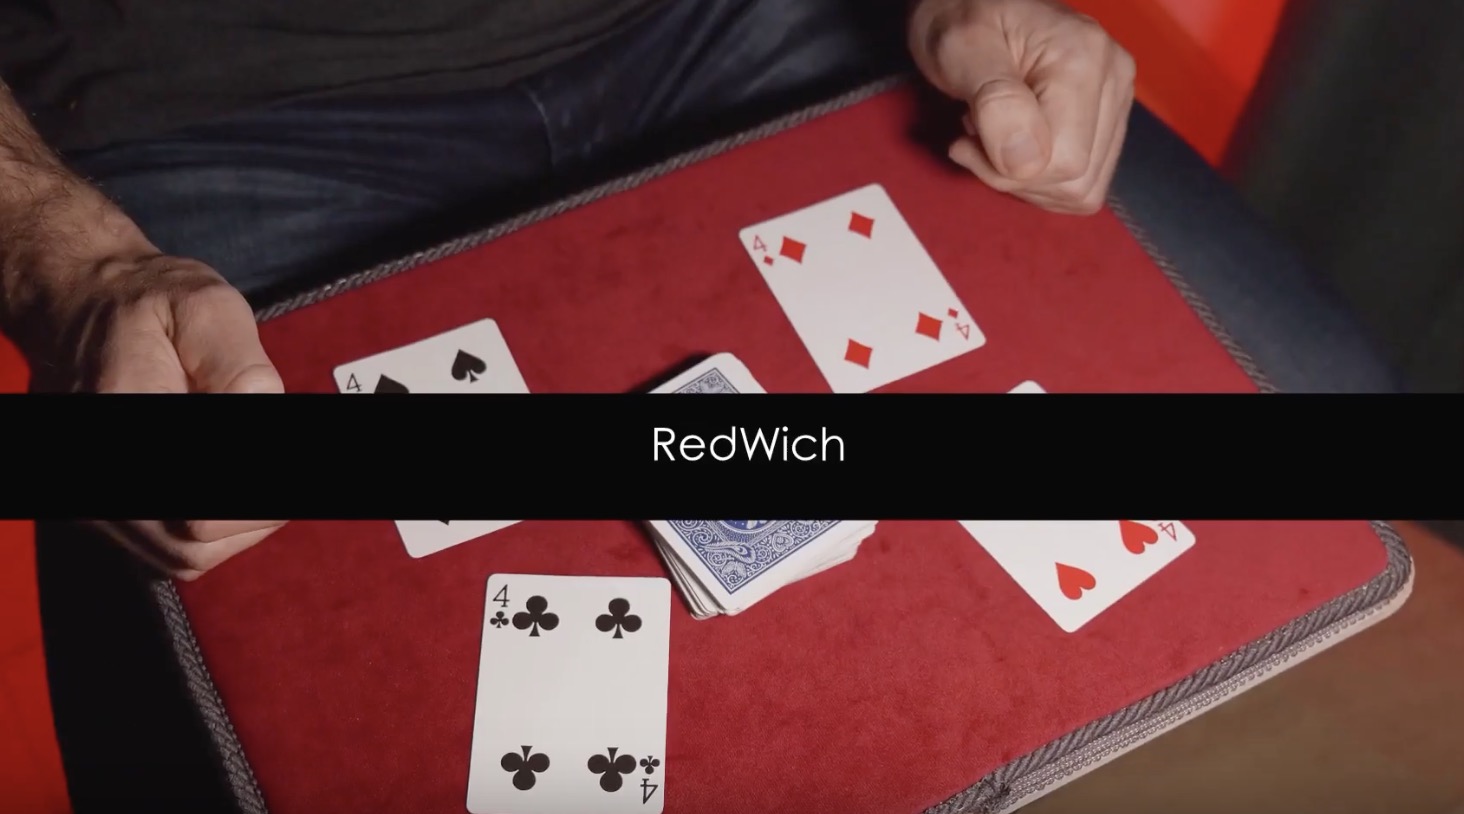 Redwich by Yoann F (MP4 Video Download 1080p FullHD Quality)